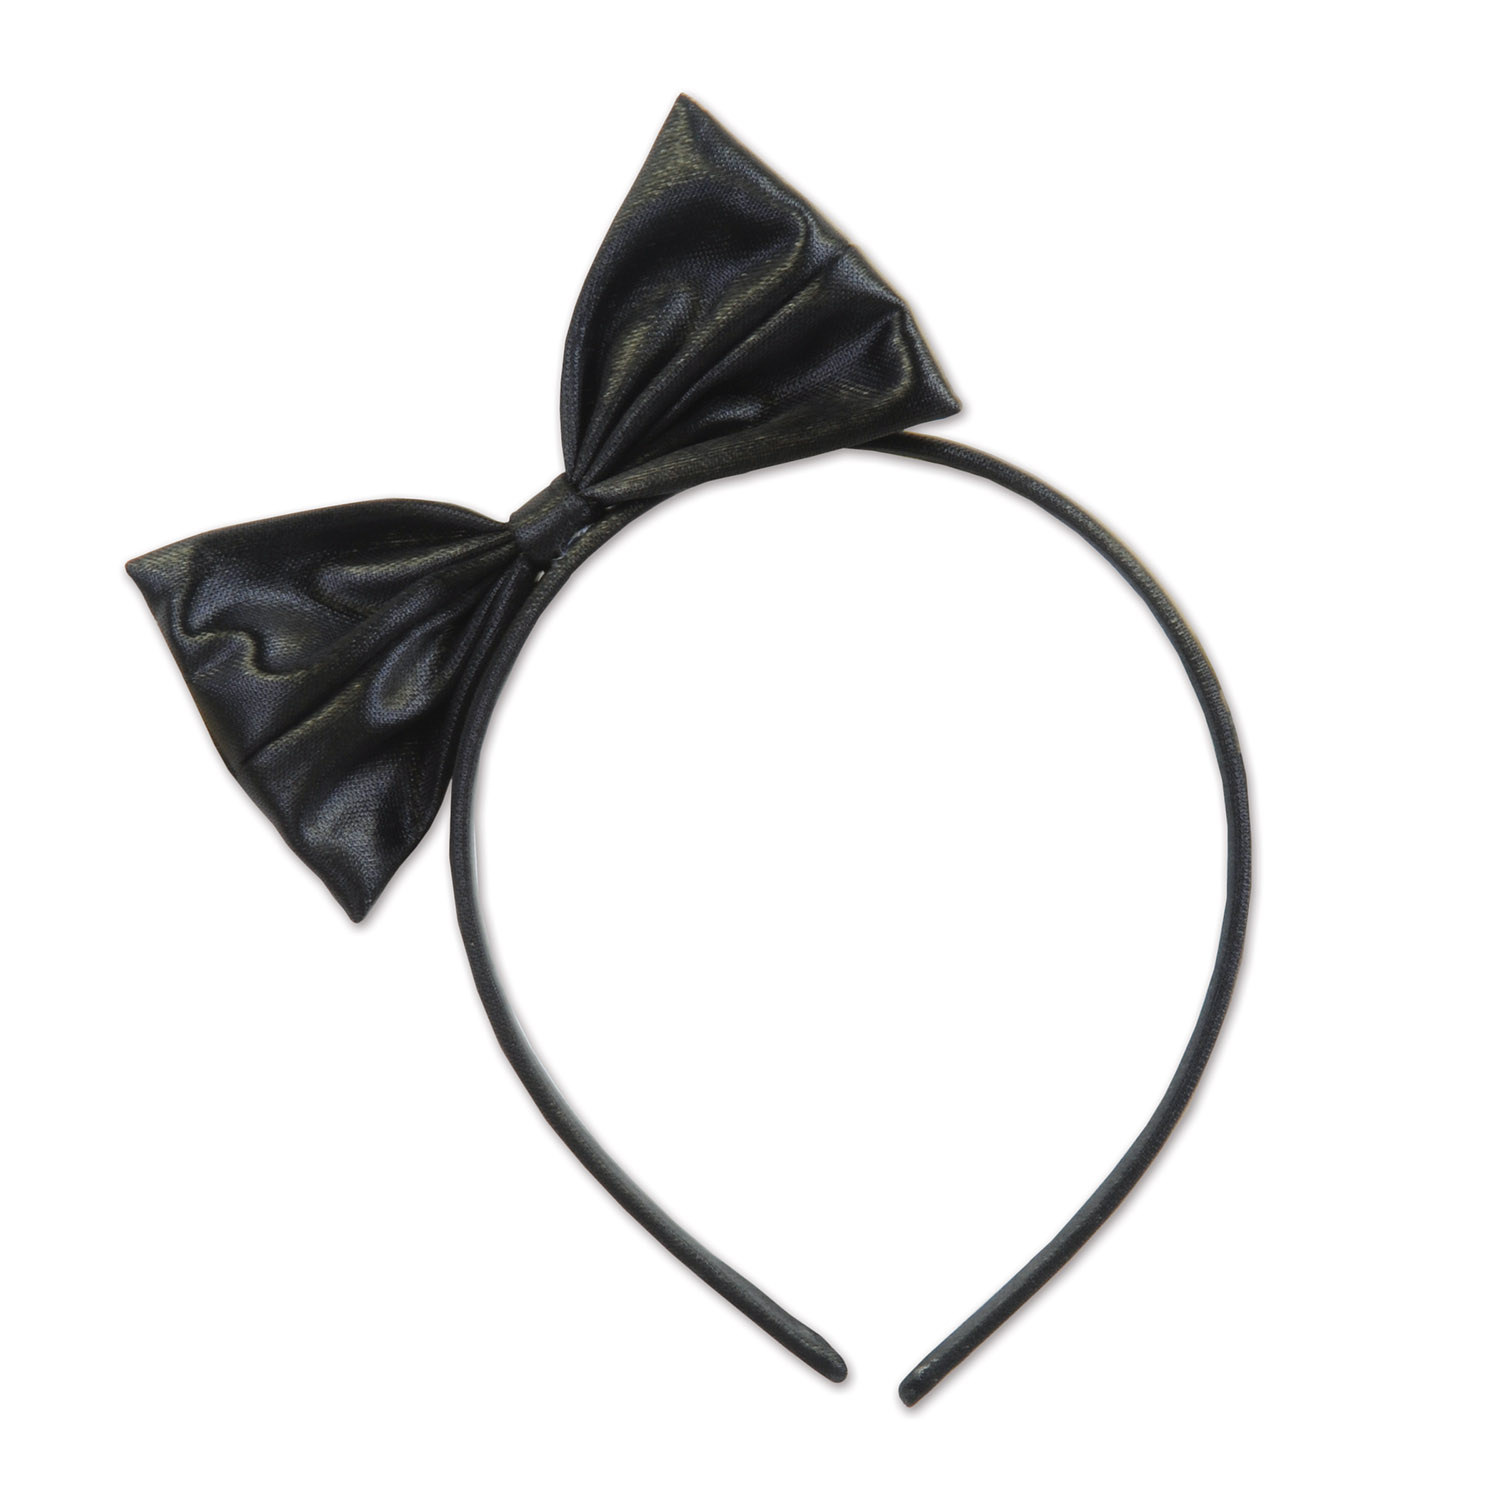 Black Bow Black Hair Bow Large Black Bow Simple Black Bow Black Bow on Hard Headband Solid Black Headband BUY 3 GET 1 FREE!